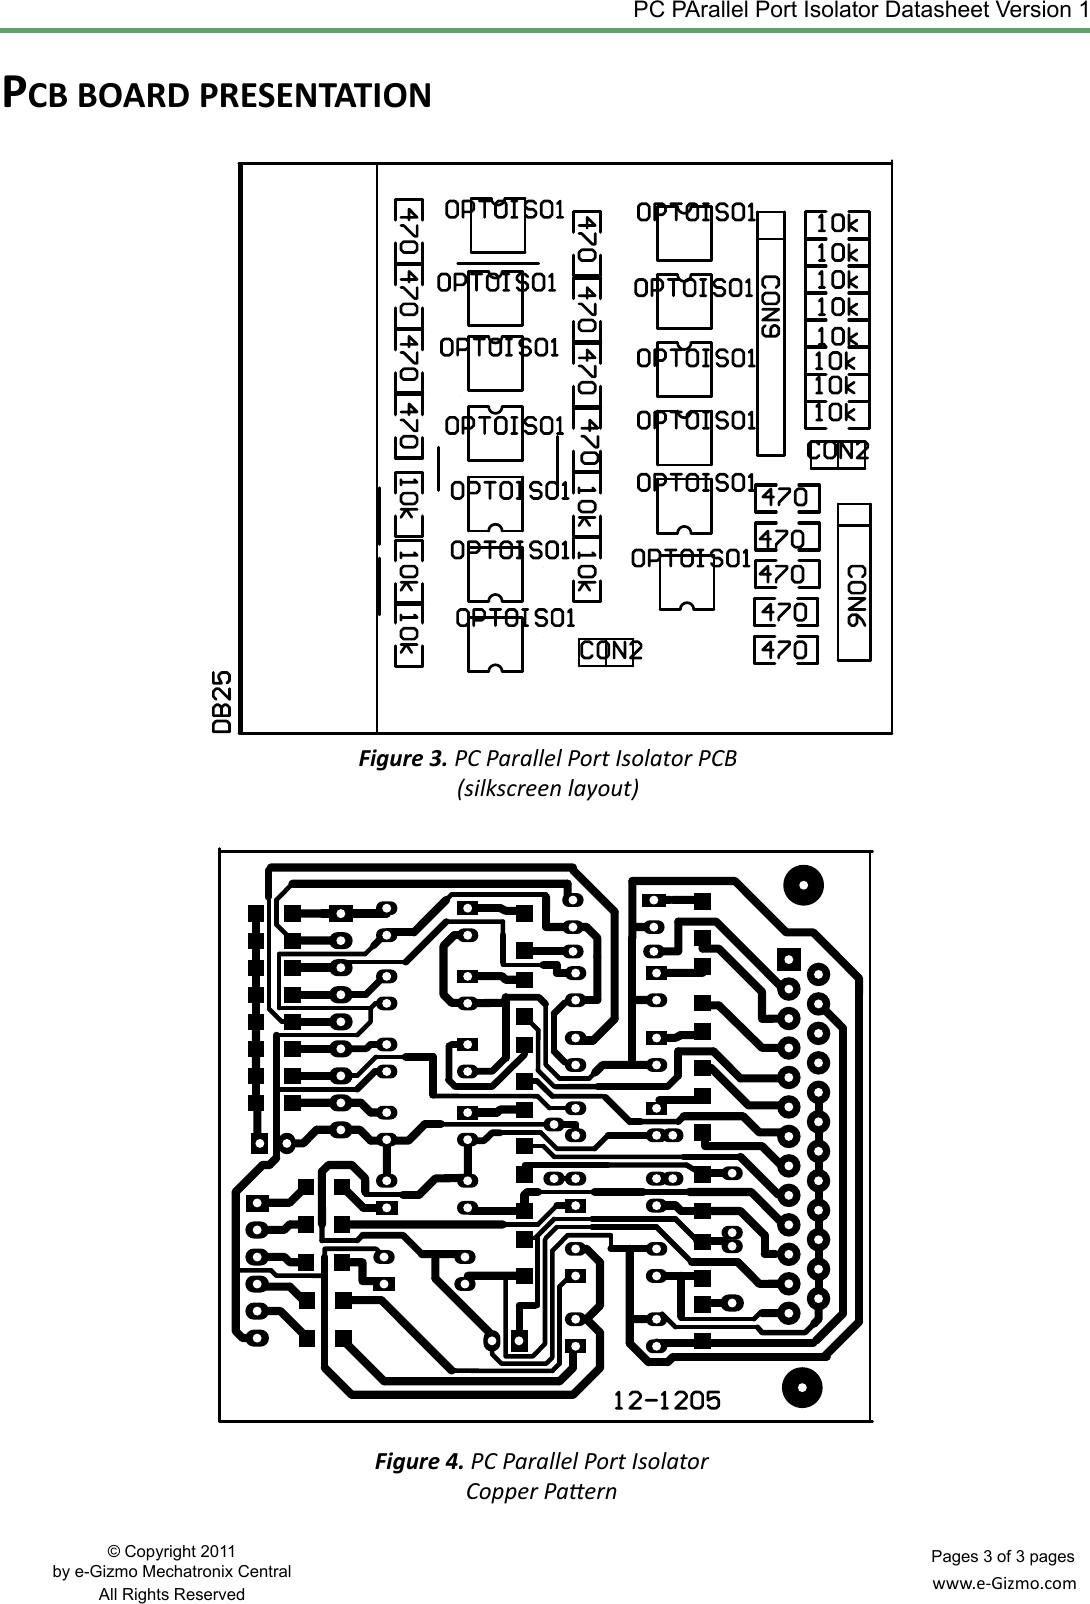 Pc Parallel Port Isolator Hardware Manual